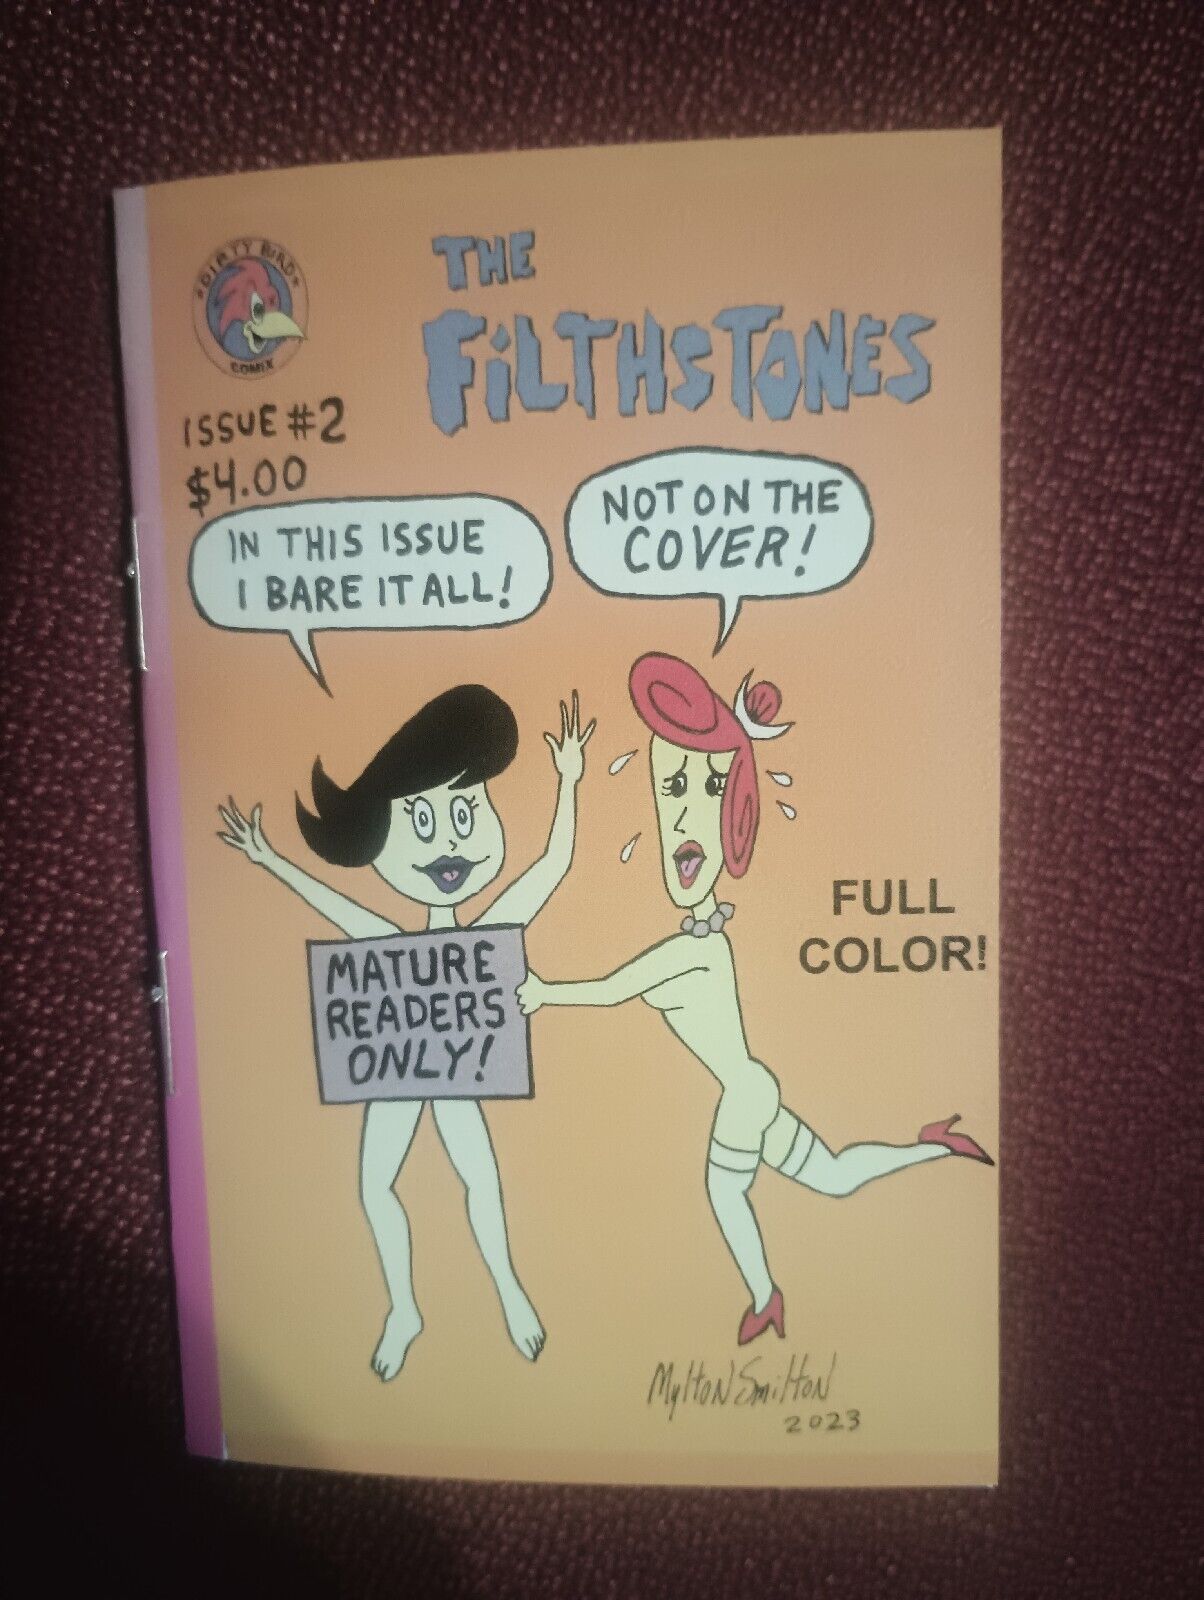 The Filthstones #2 Flintstones Adult Parody Comic Dirty Bird Comix RARE Limited